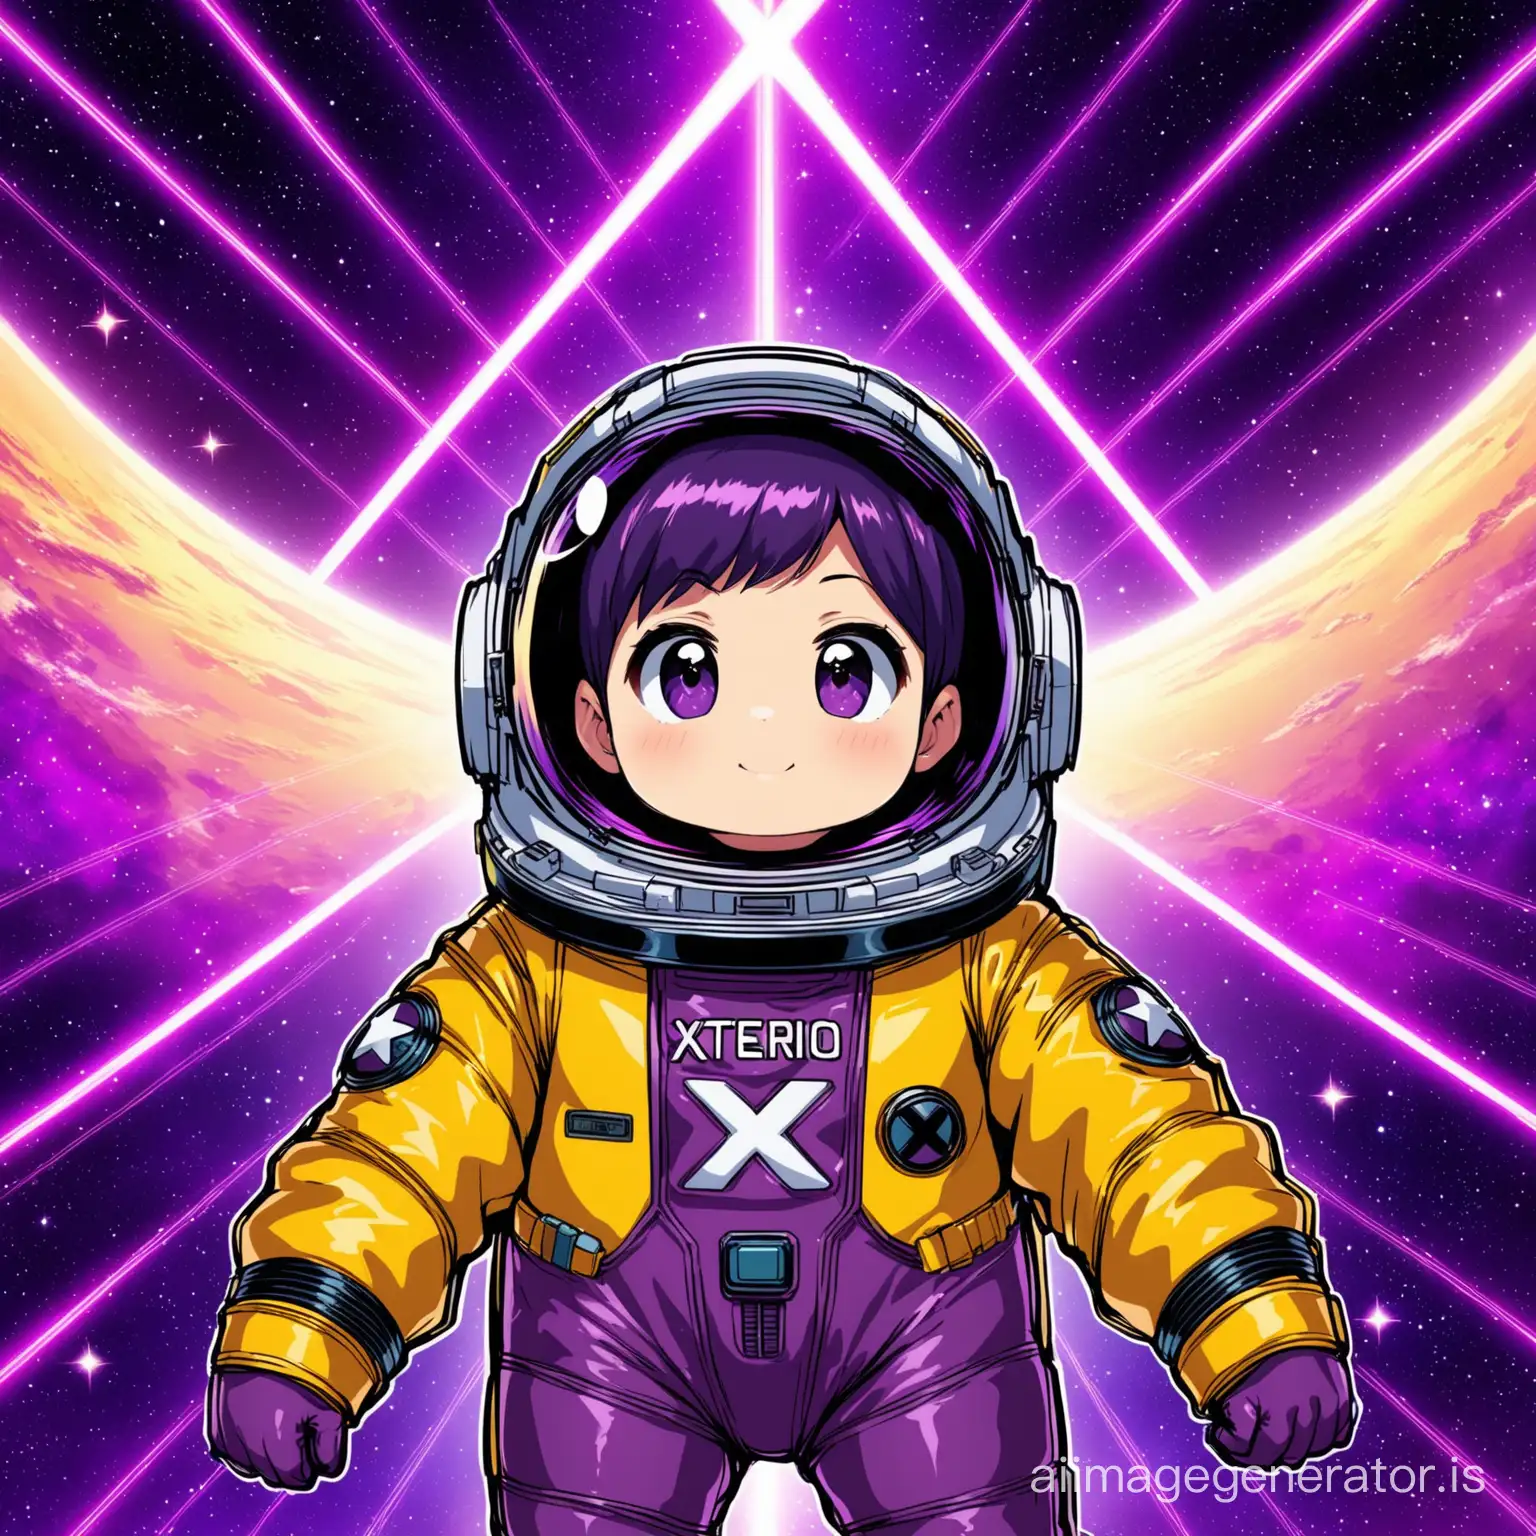 Cosmic-Purple-Space-Scene-with-XMen-Astronauts-and-Xterio-Text